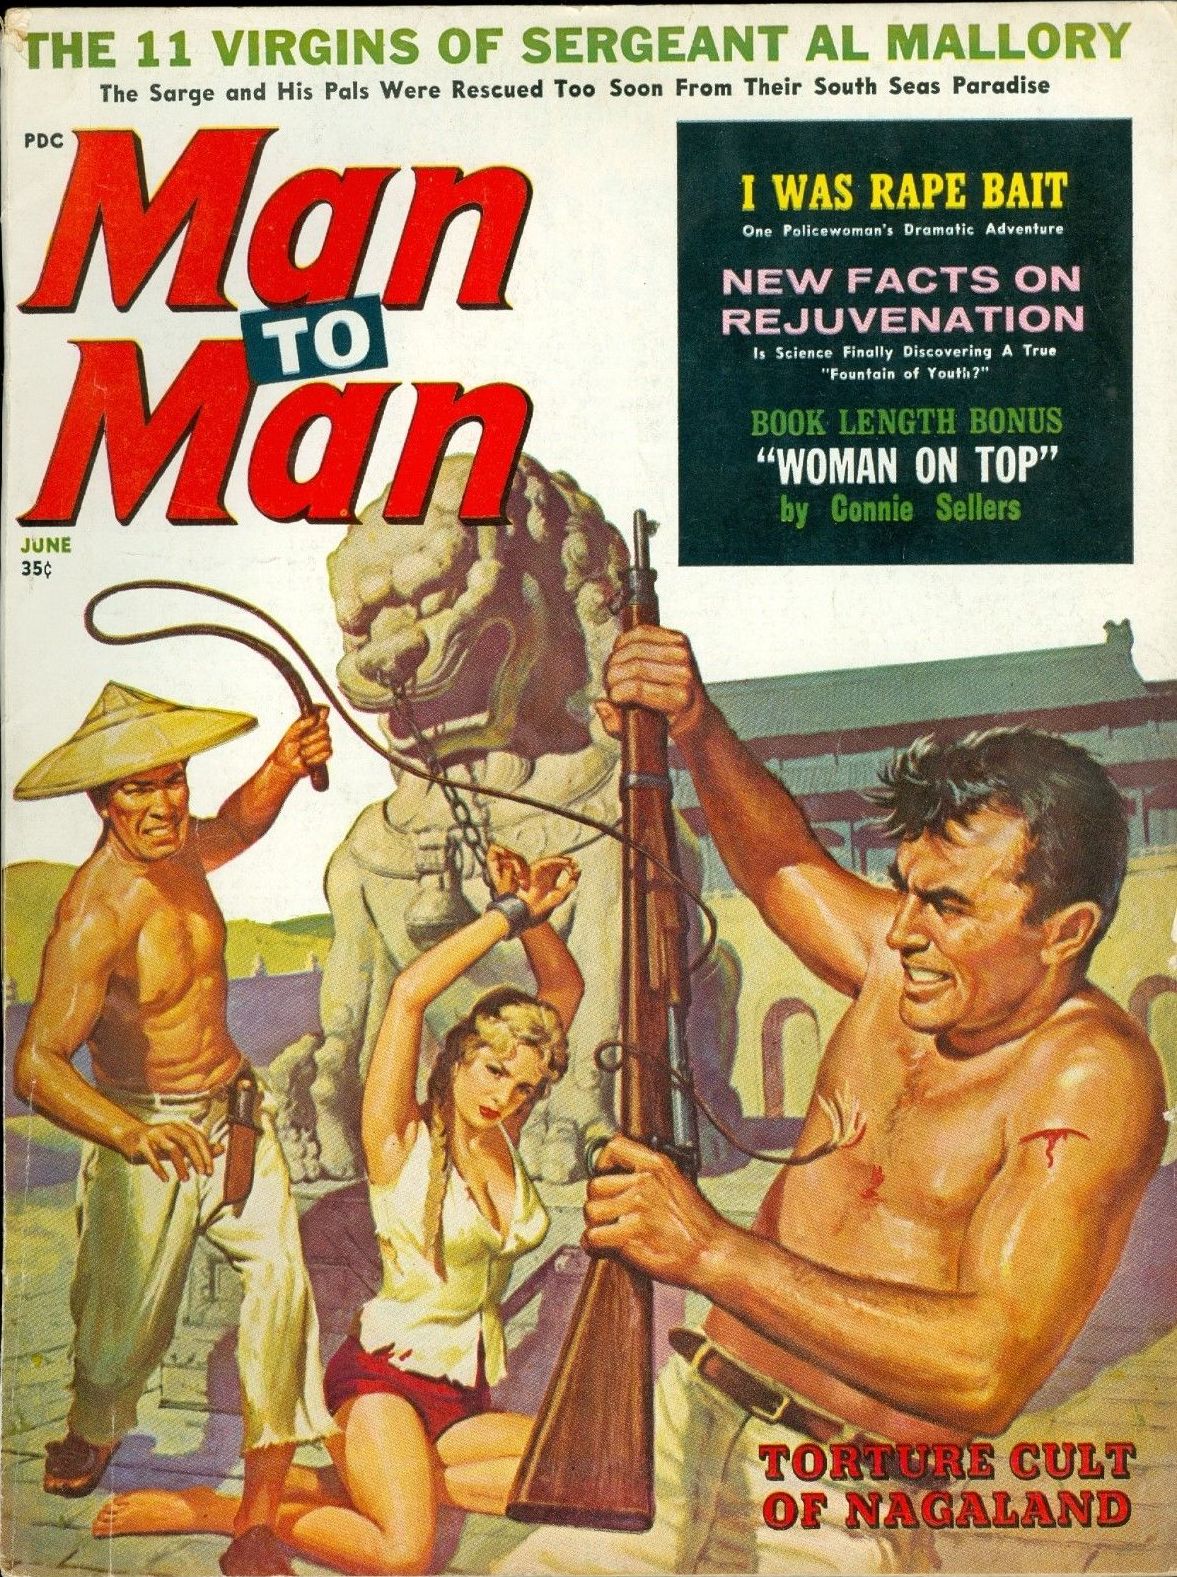 https://pulpcovers.com/wp-content/uploads/2016/12/MAN-TO-MAN-June-1962.jpg